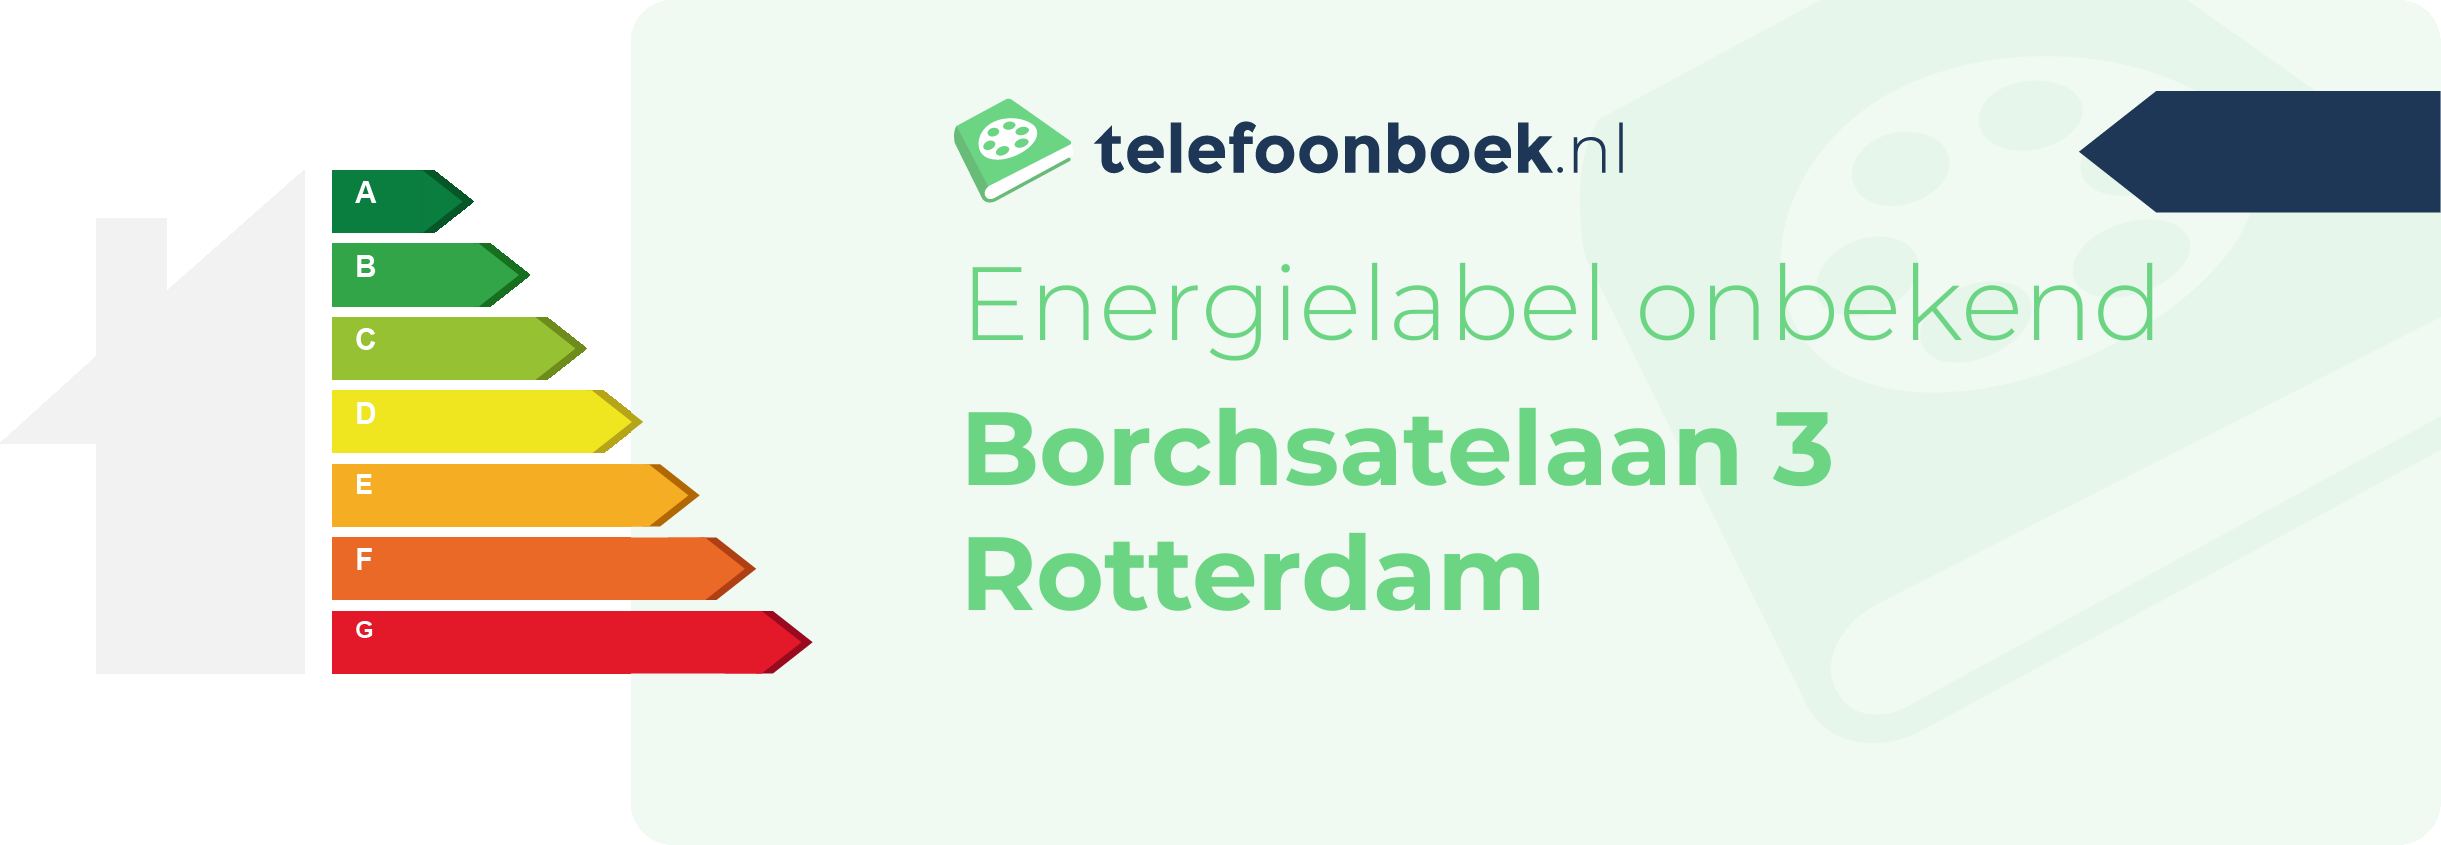 Energielabel Borchsatelaan 3 Rotterdam